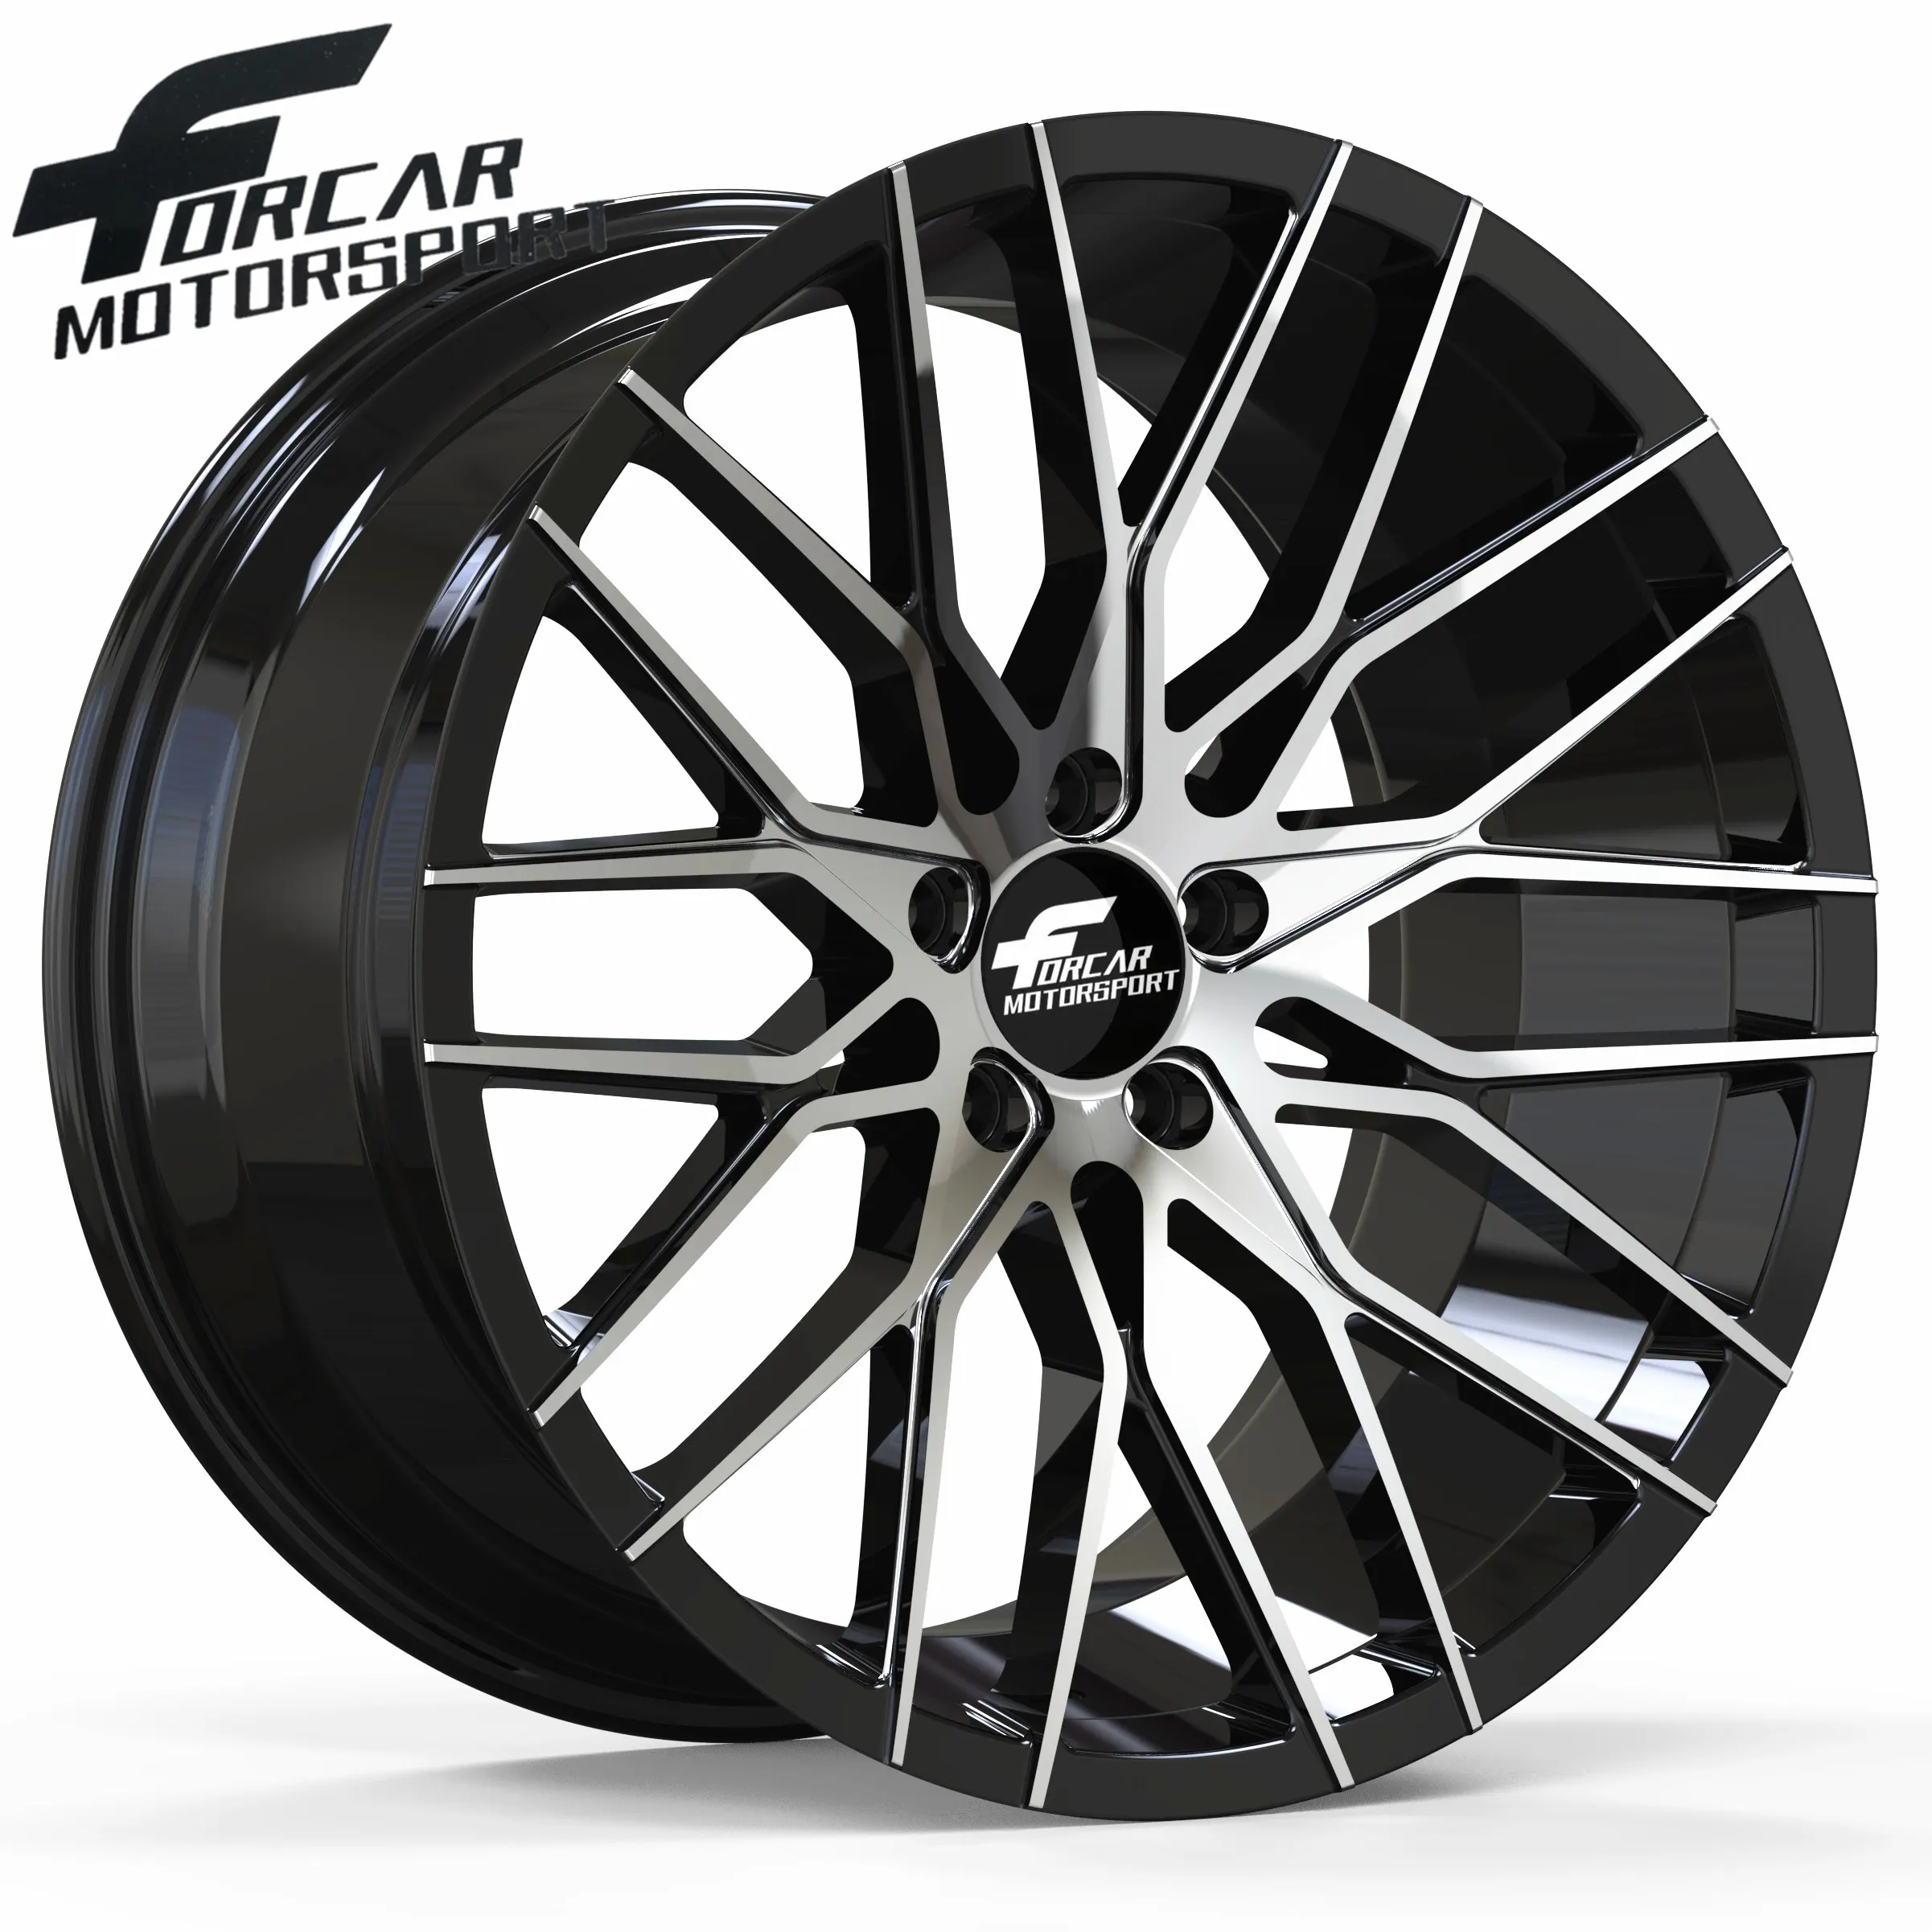 

Custom Aftermarket Car Alloy Wheel Rims for Audi Benz VW BMW, Black machine face